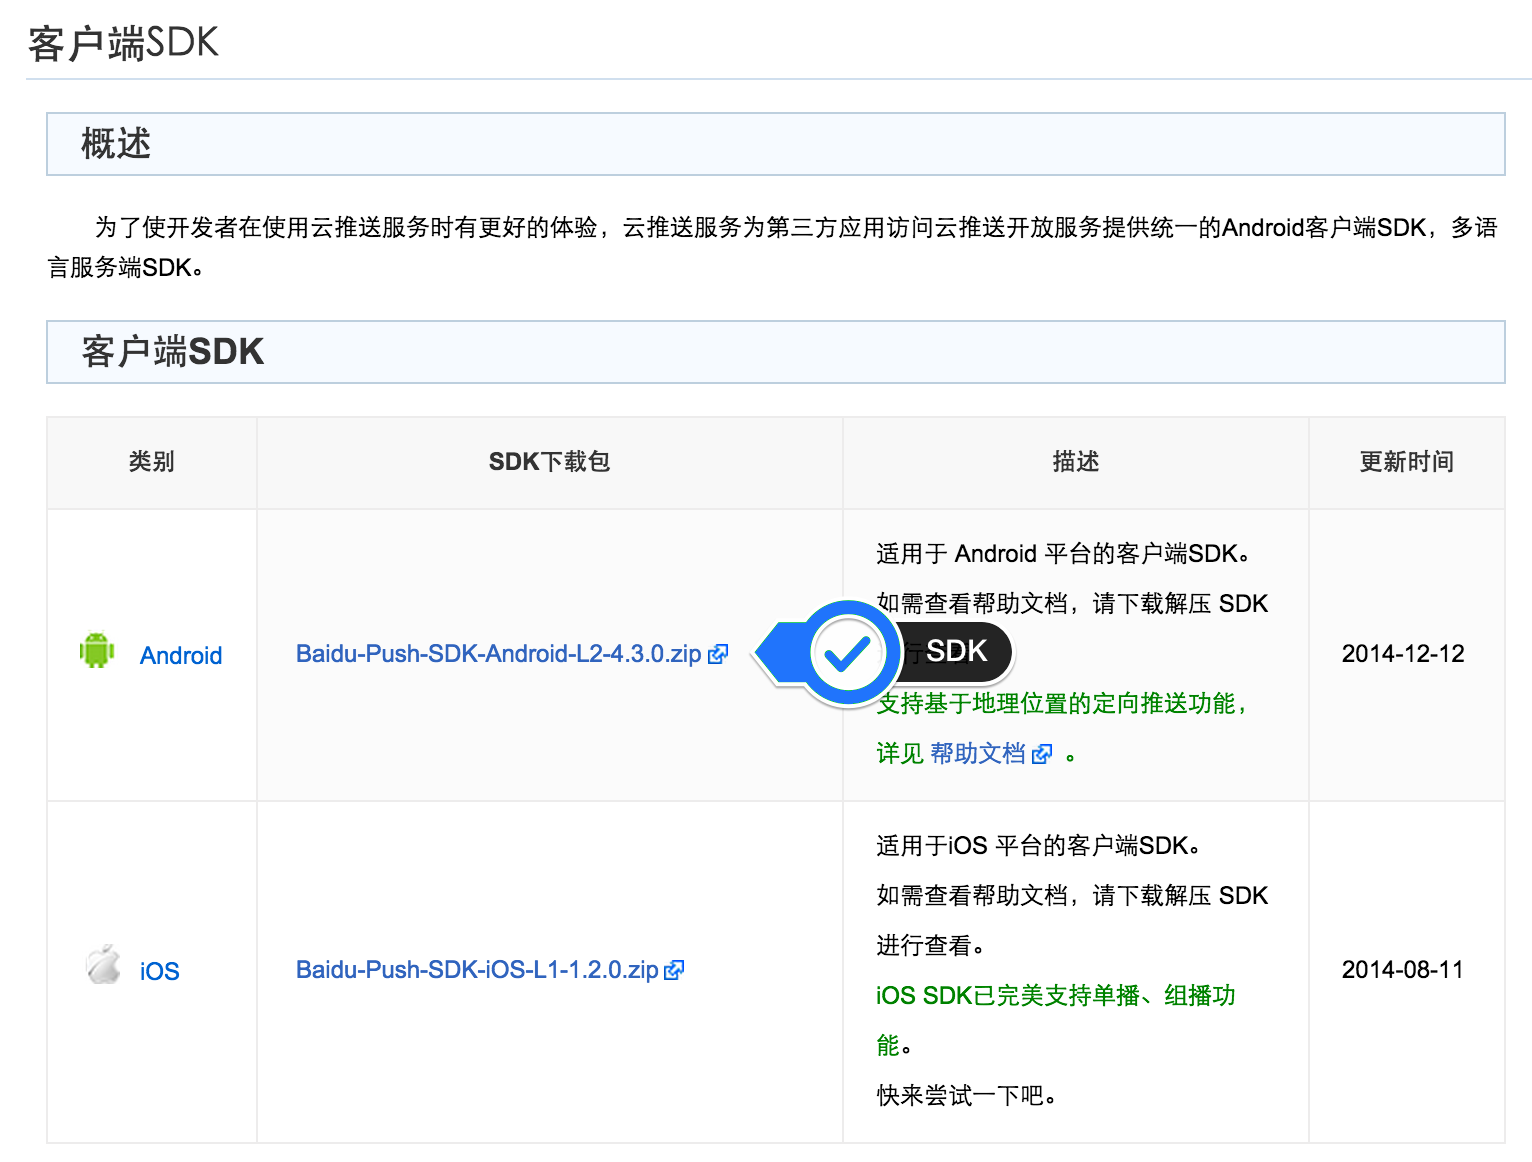 Baidu SDK Portal